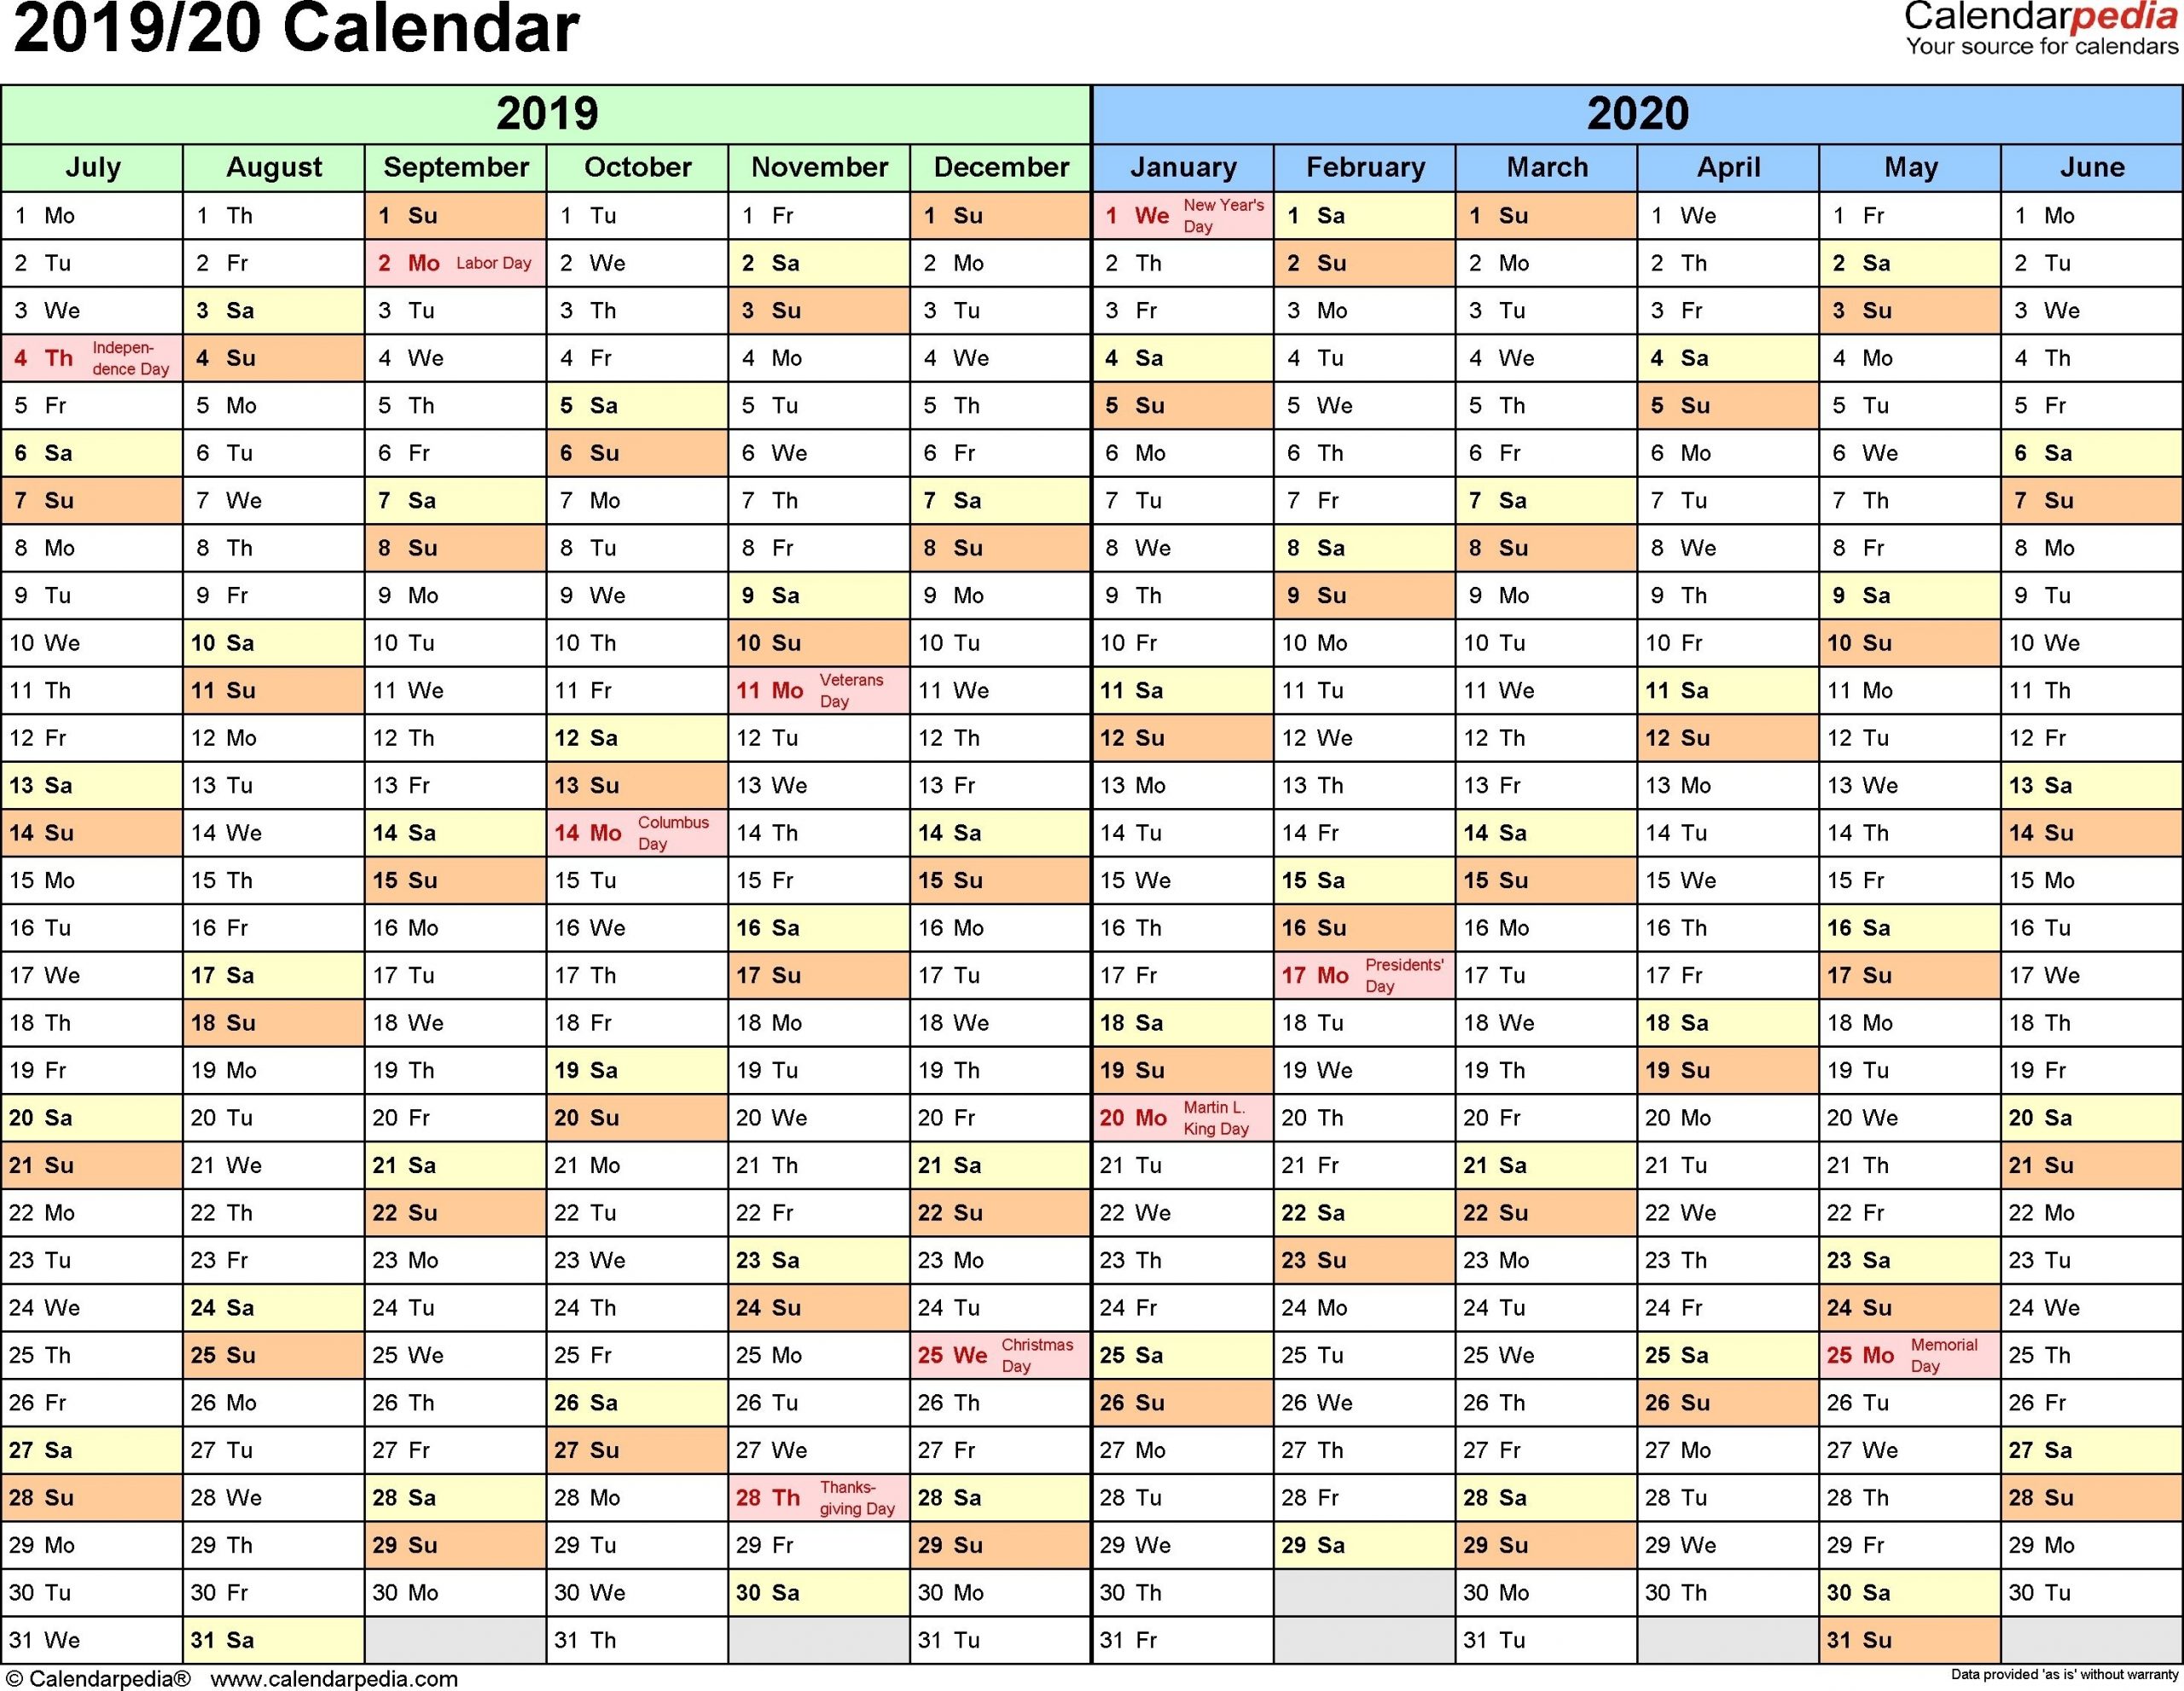 Financial Week Calendar 2019 2020 In 2020 | Calendar pertaining to Financial Calendar 2019-2020 In Weeks